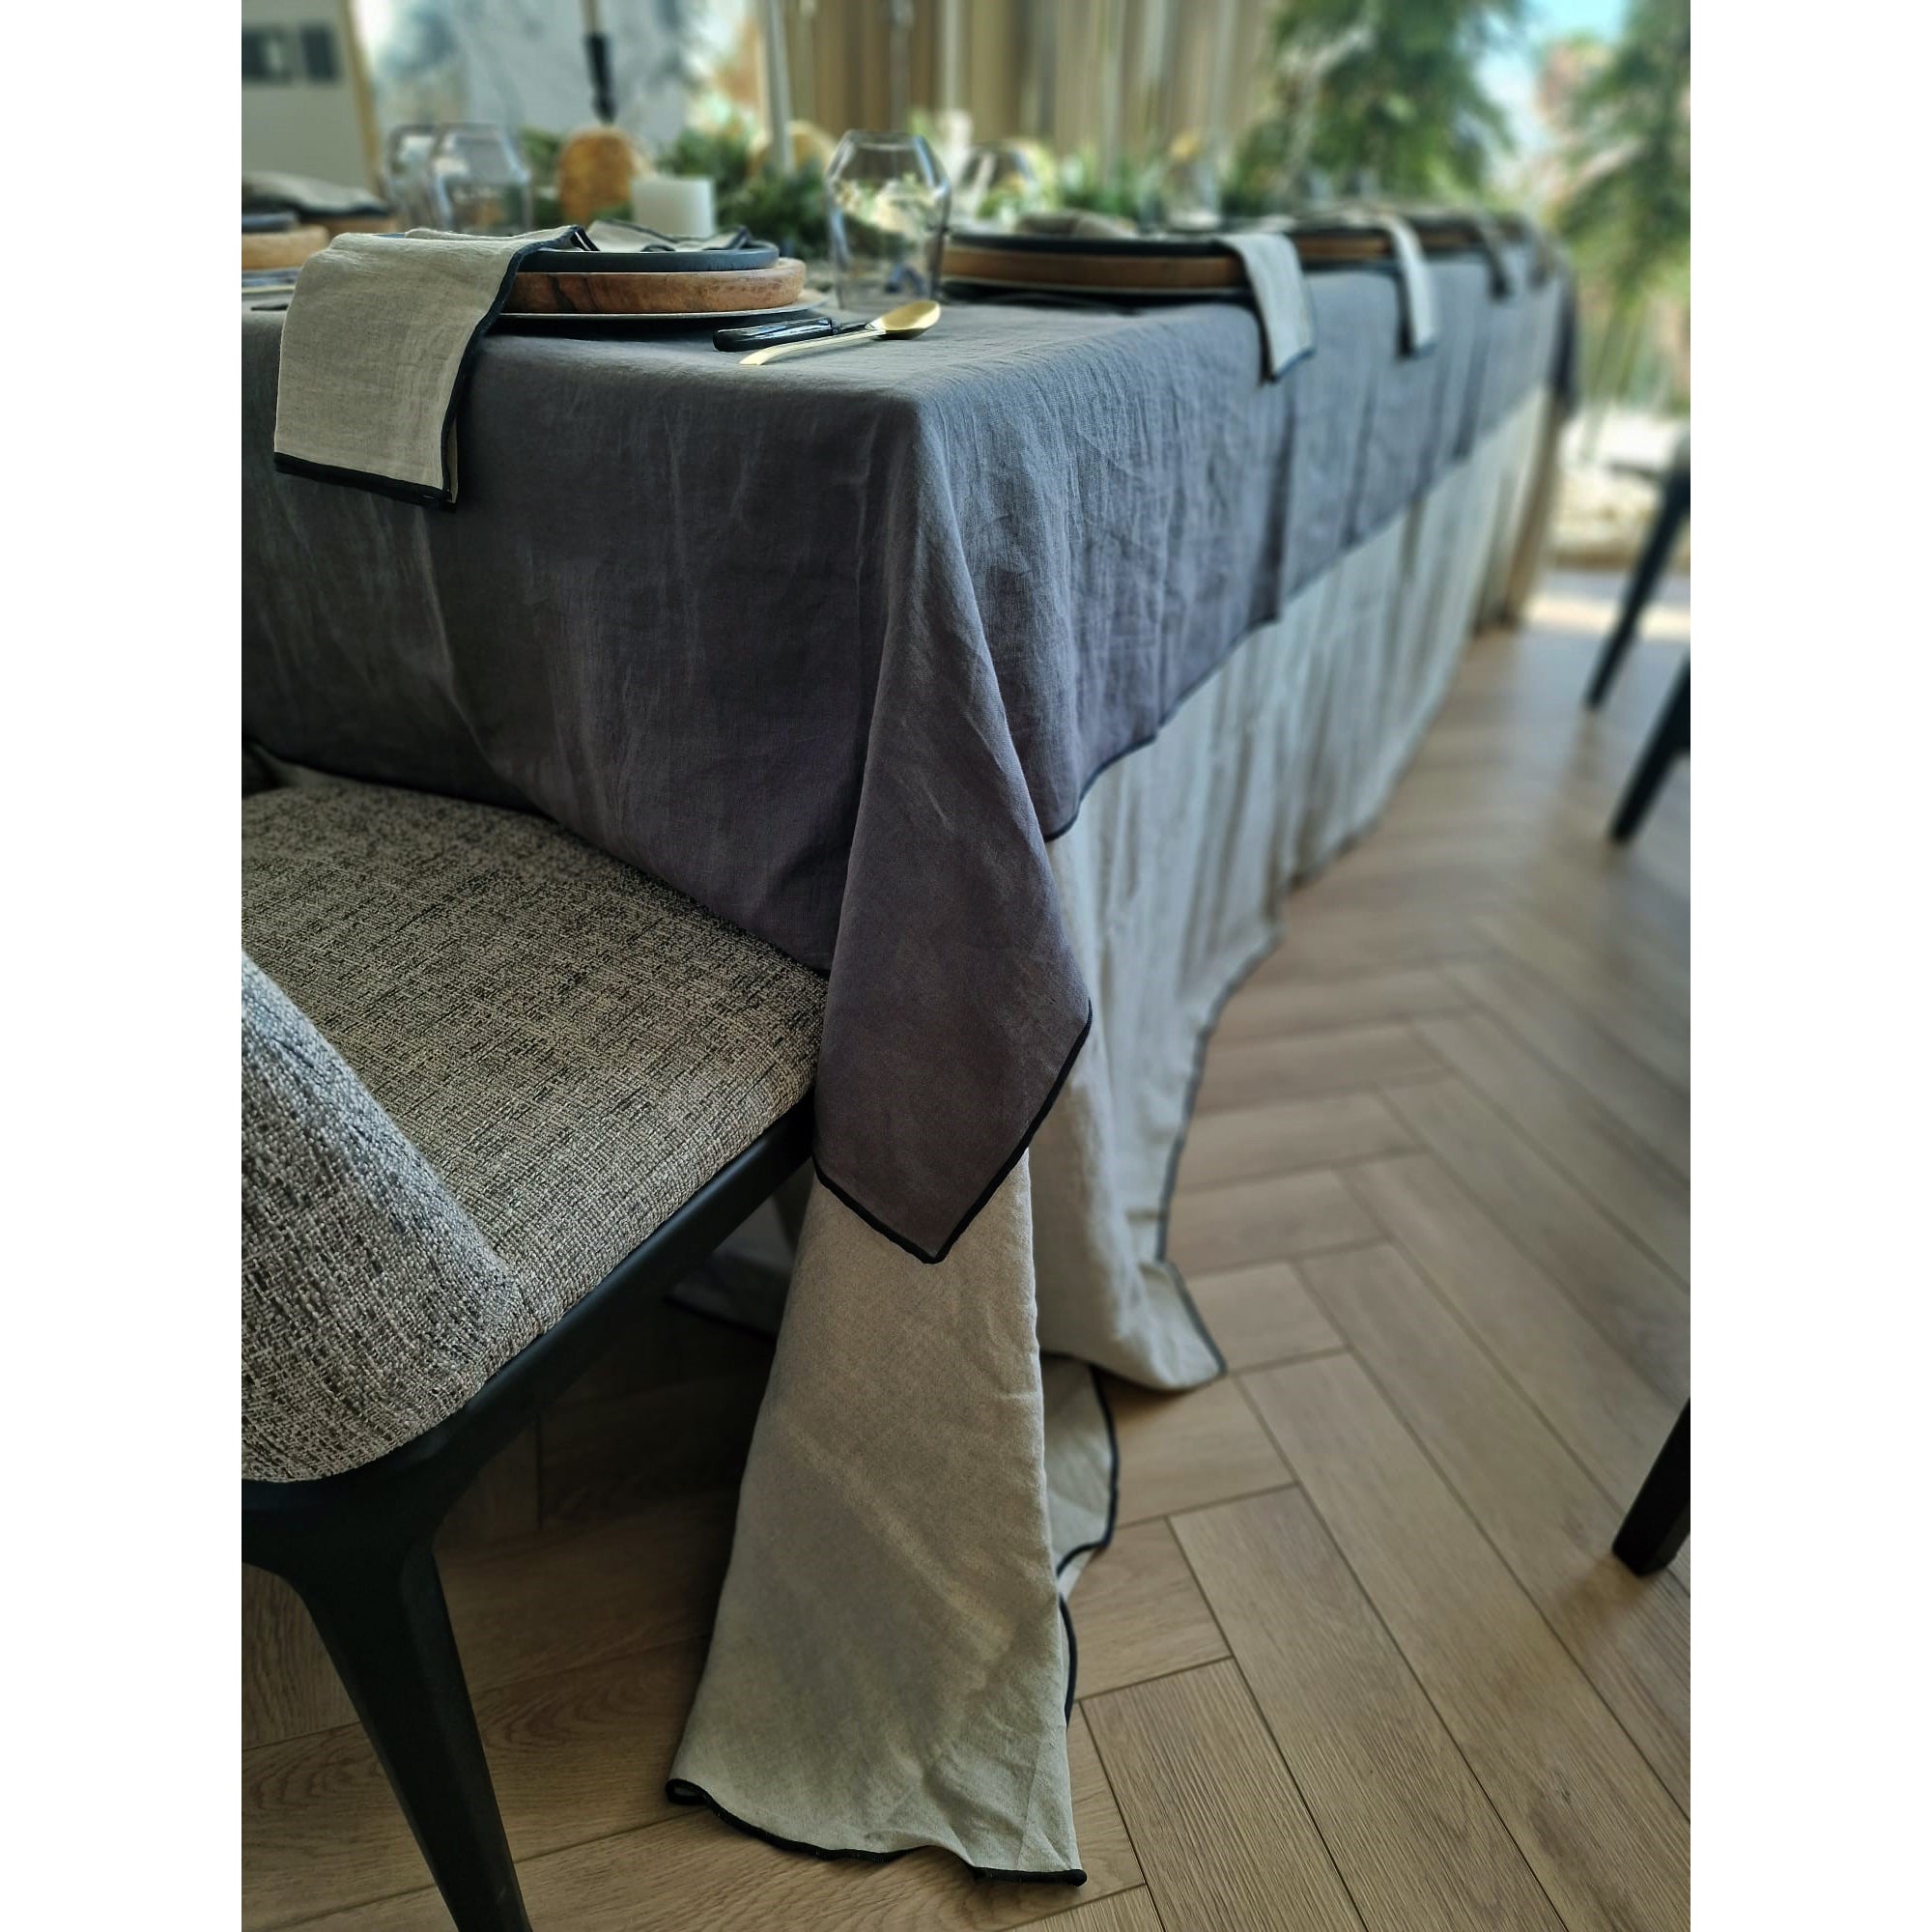 Mantel de lino gris sobre mantel de lino natural.